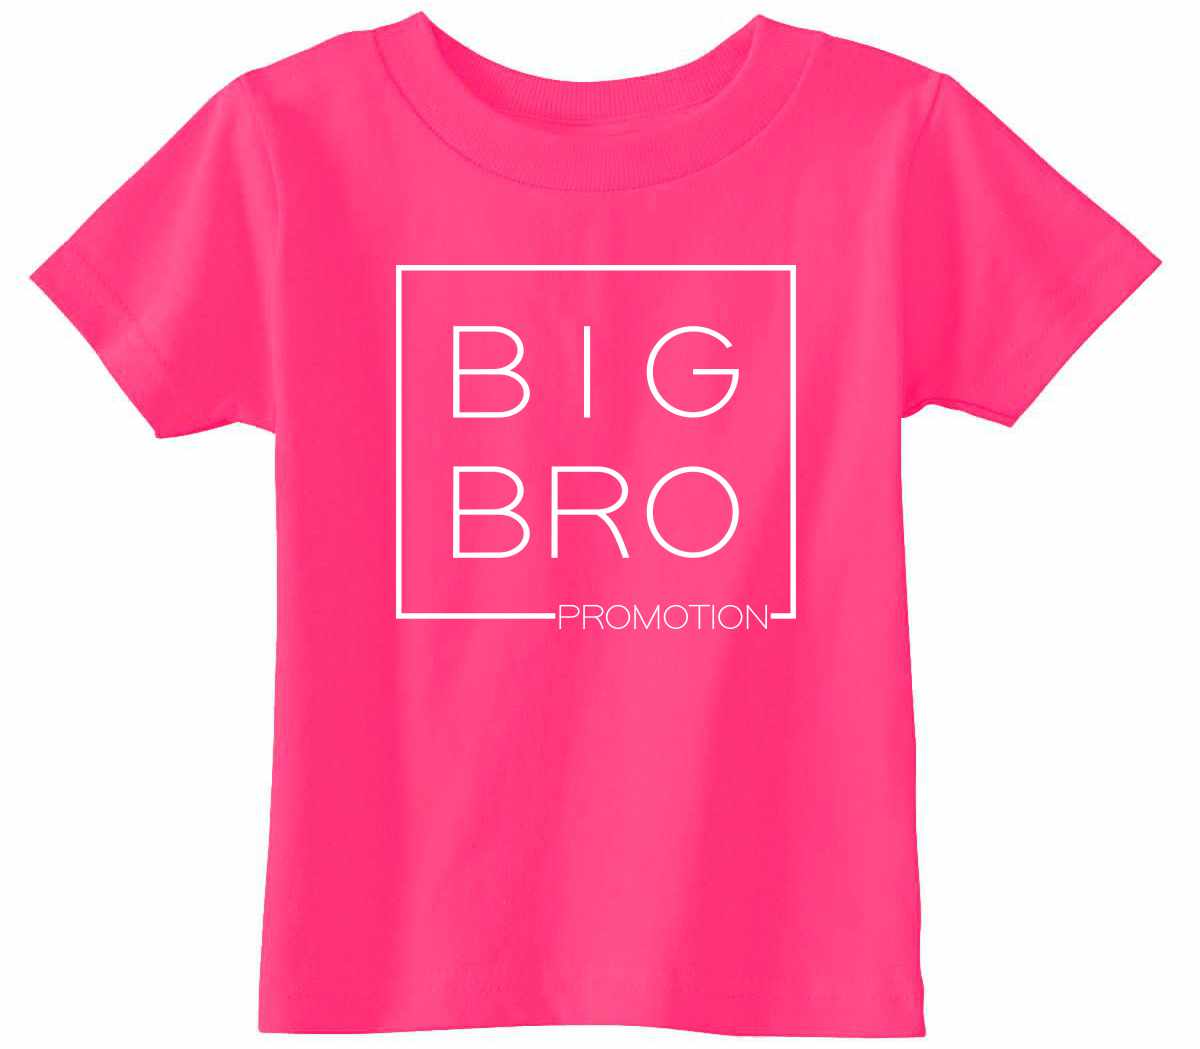 Big Bro Promotion - Big Brother - Box on Infant-Toddler T-Shirt (#1330-7)